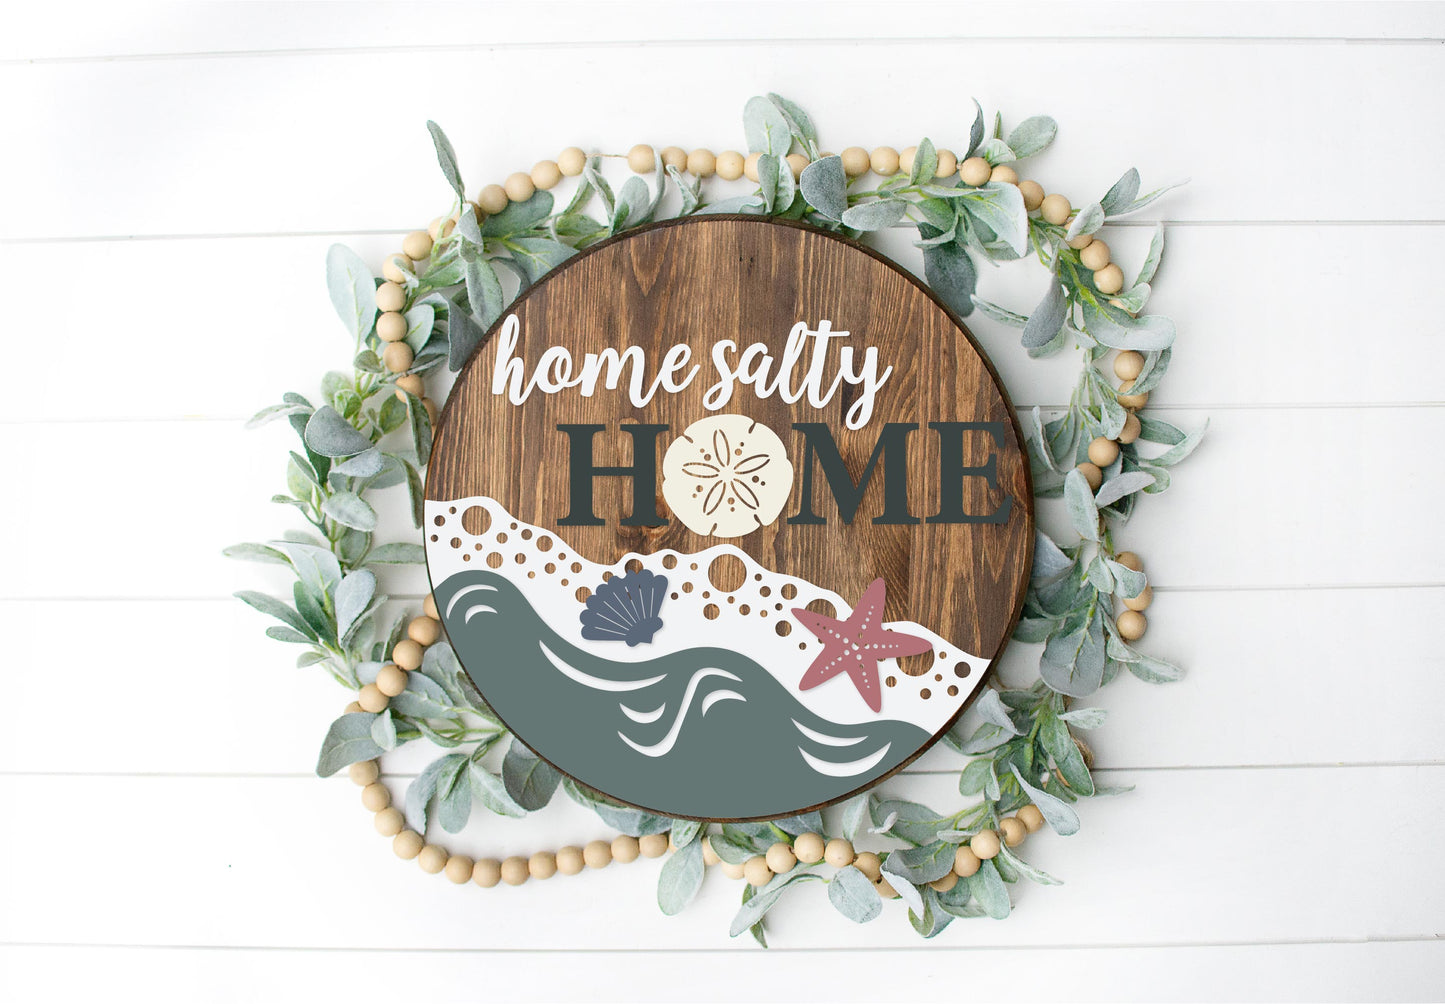 Home salty home beach sign